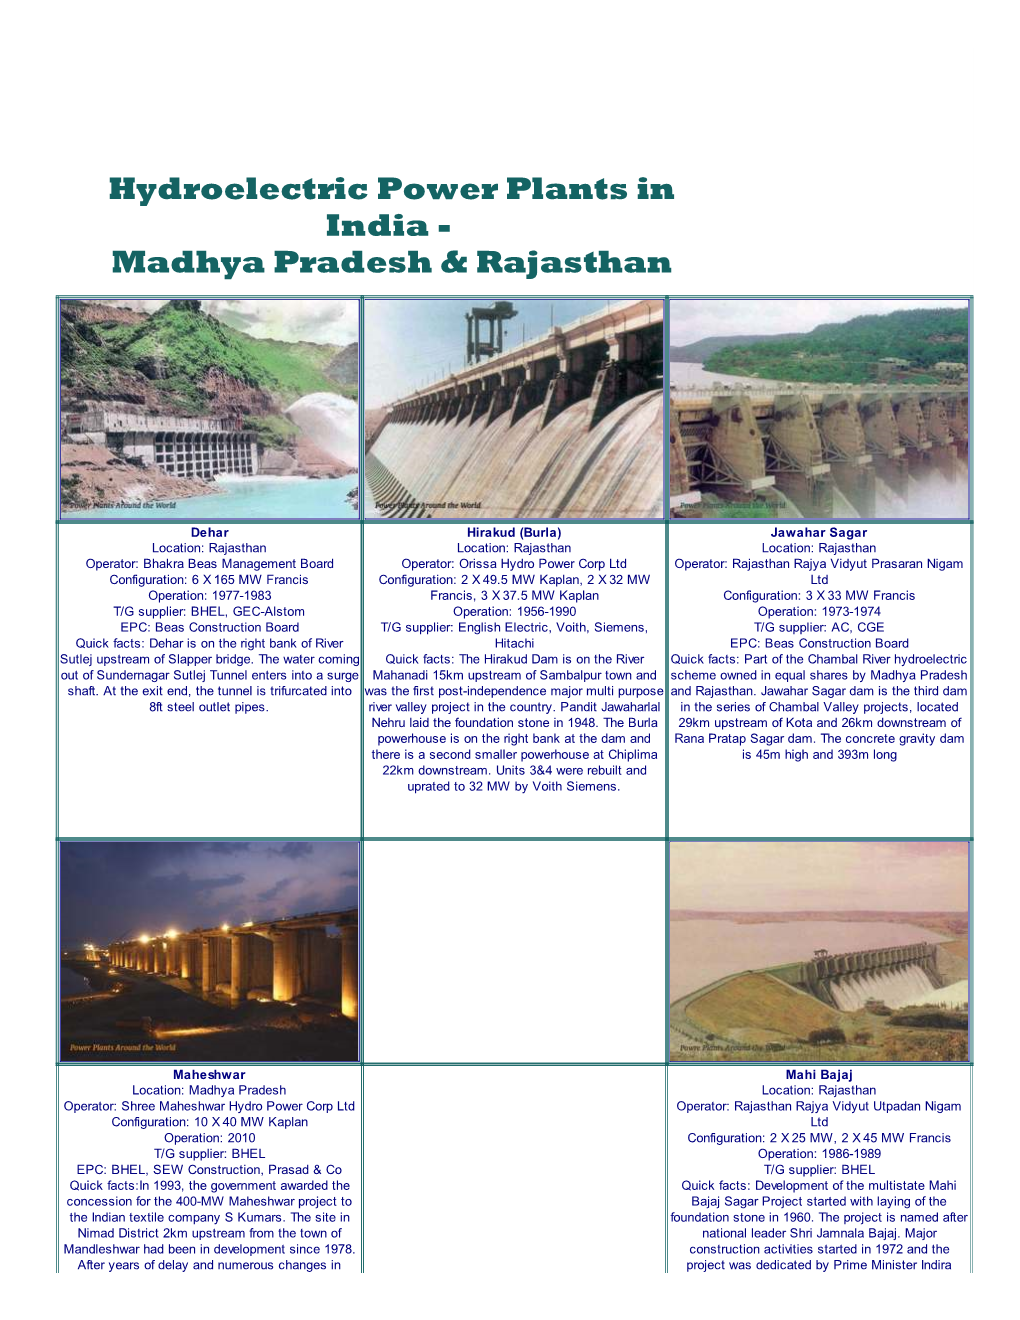 Hydroelectric Power Plants in India - Madhya Pradesh & Rajasthan